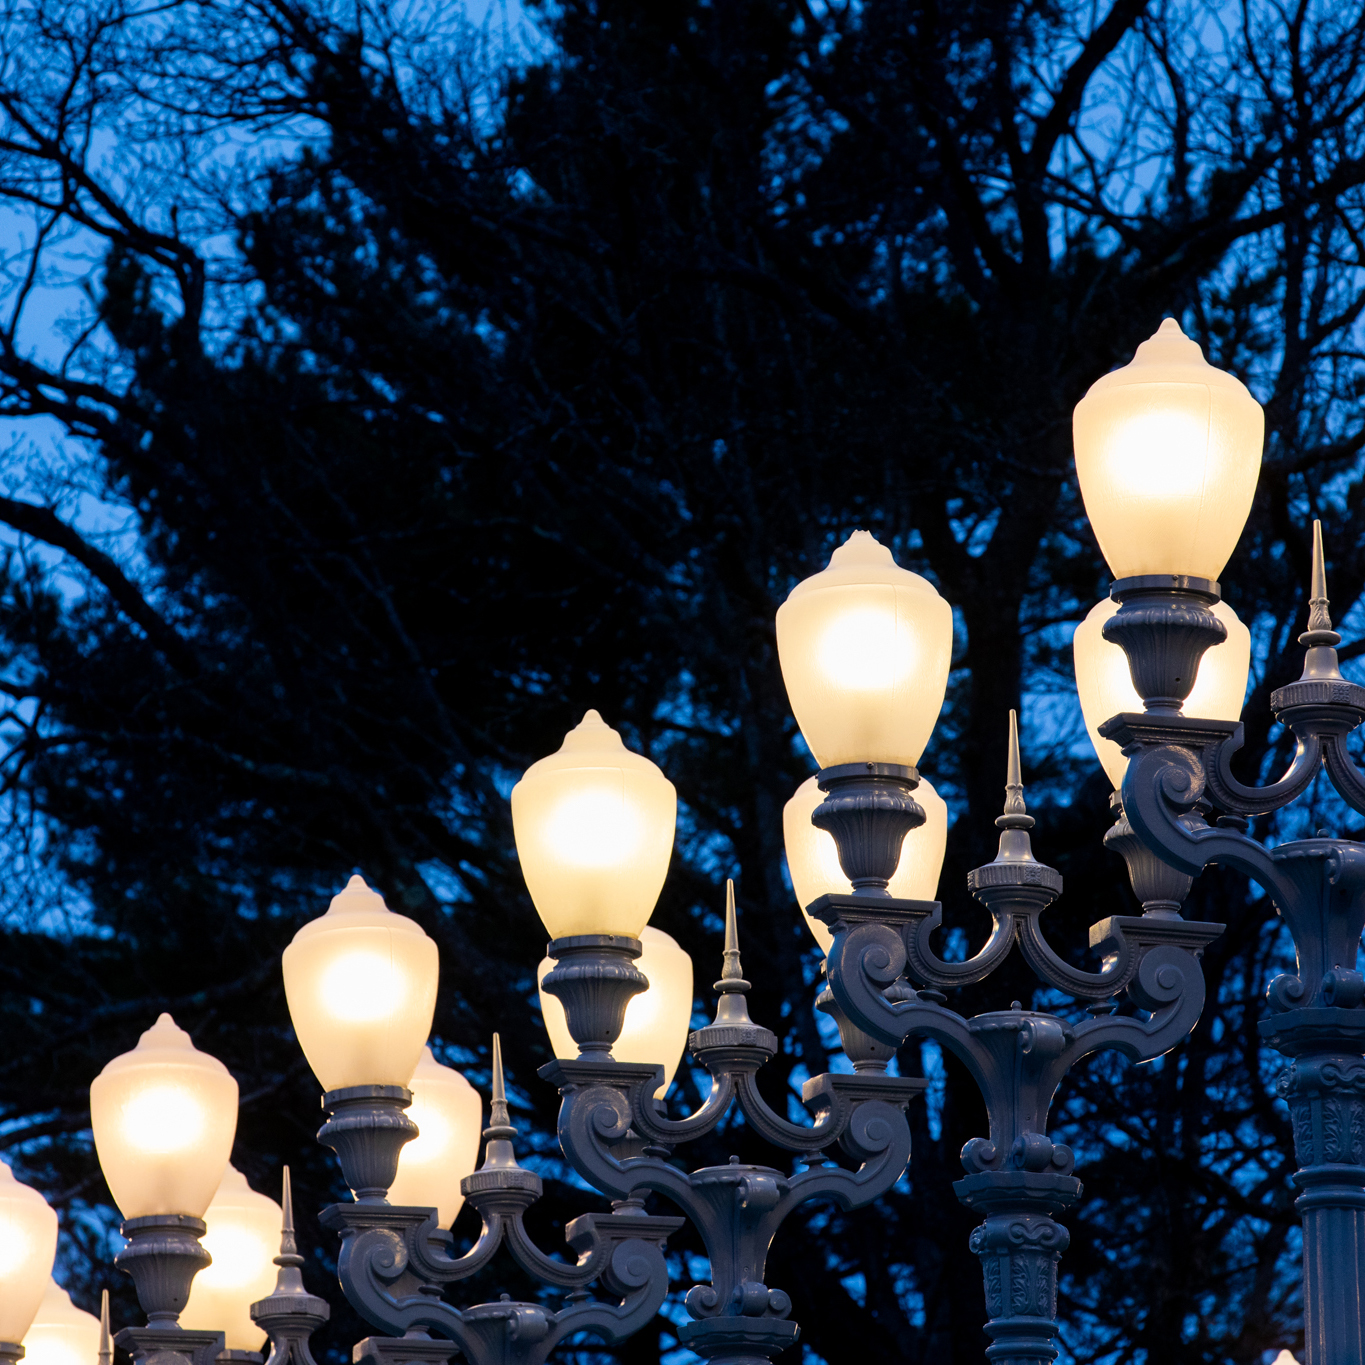 Outdoor street lamps of Chris Burden sculpture illuminated